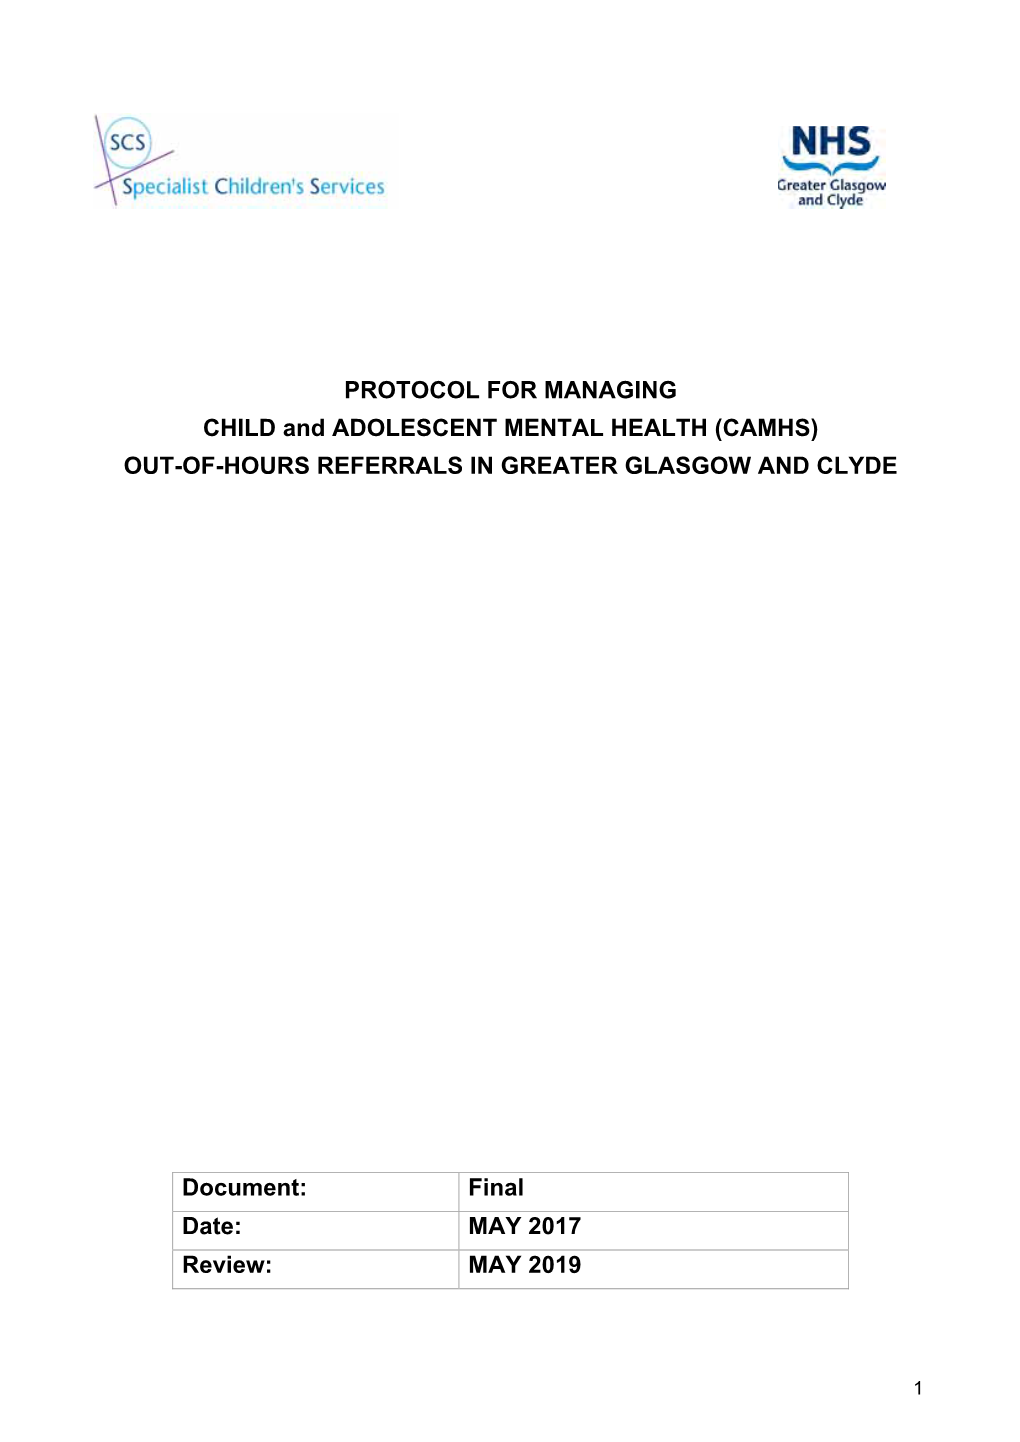 Protocol for Managing Child & Adolescent Mental